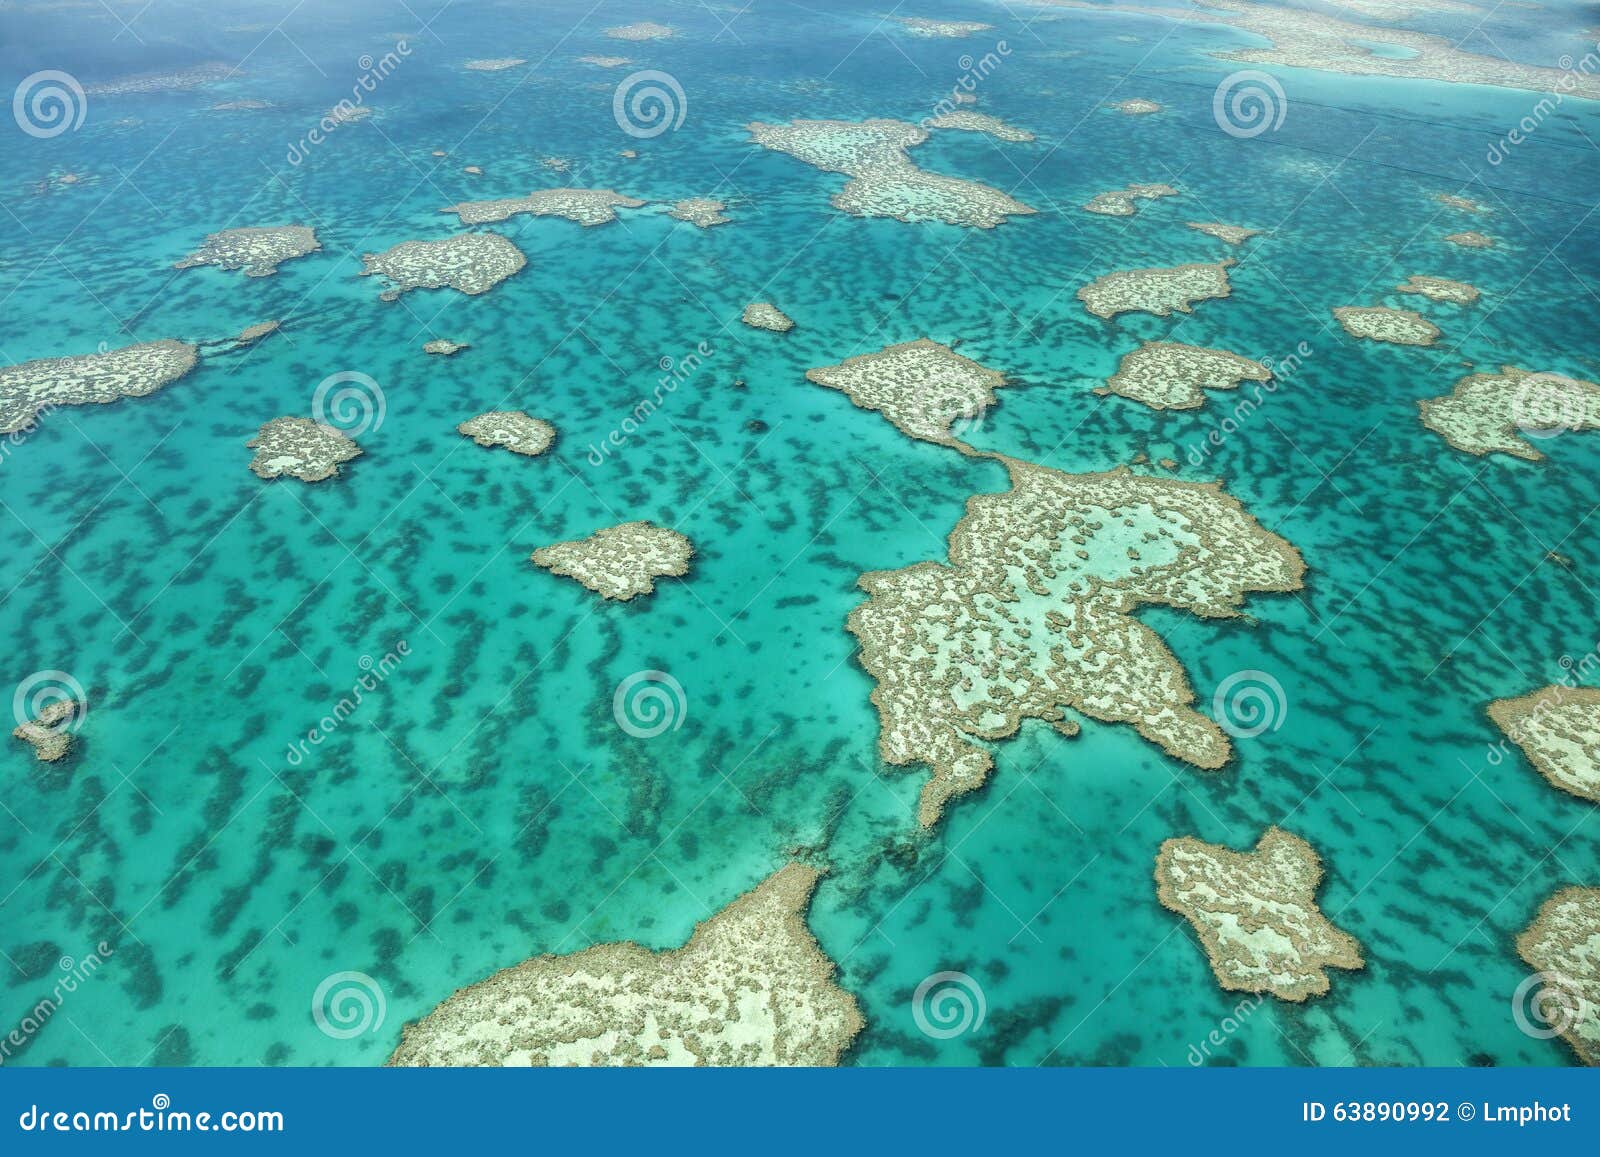 aerial view of great barrier reef